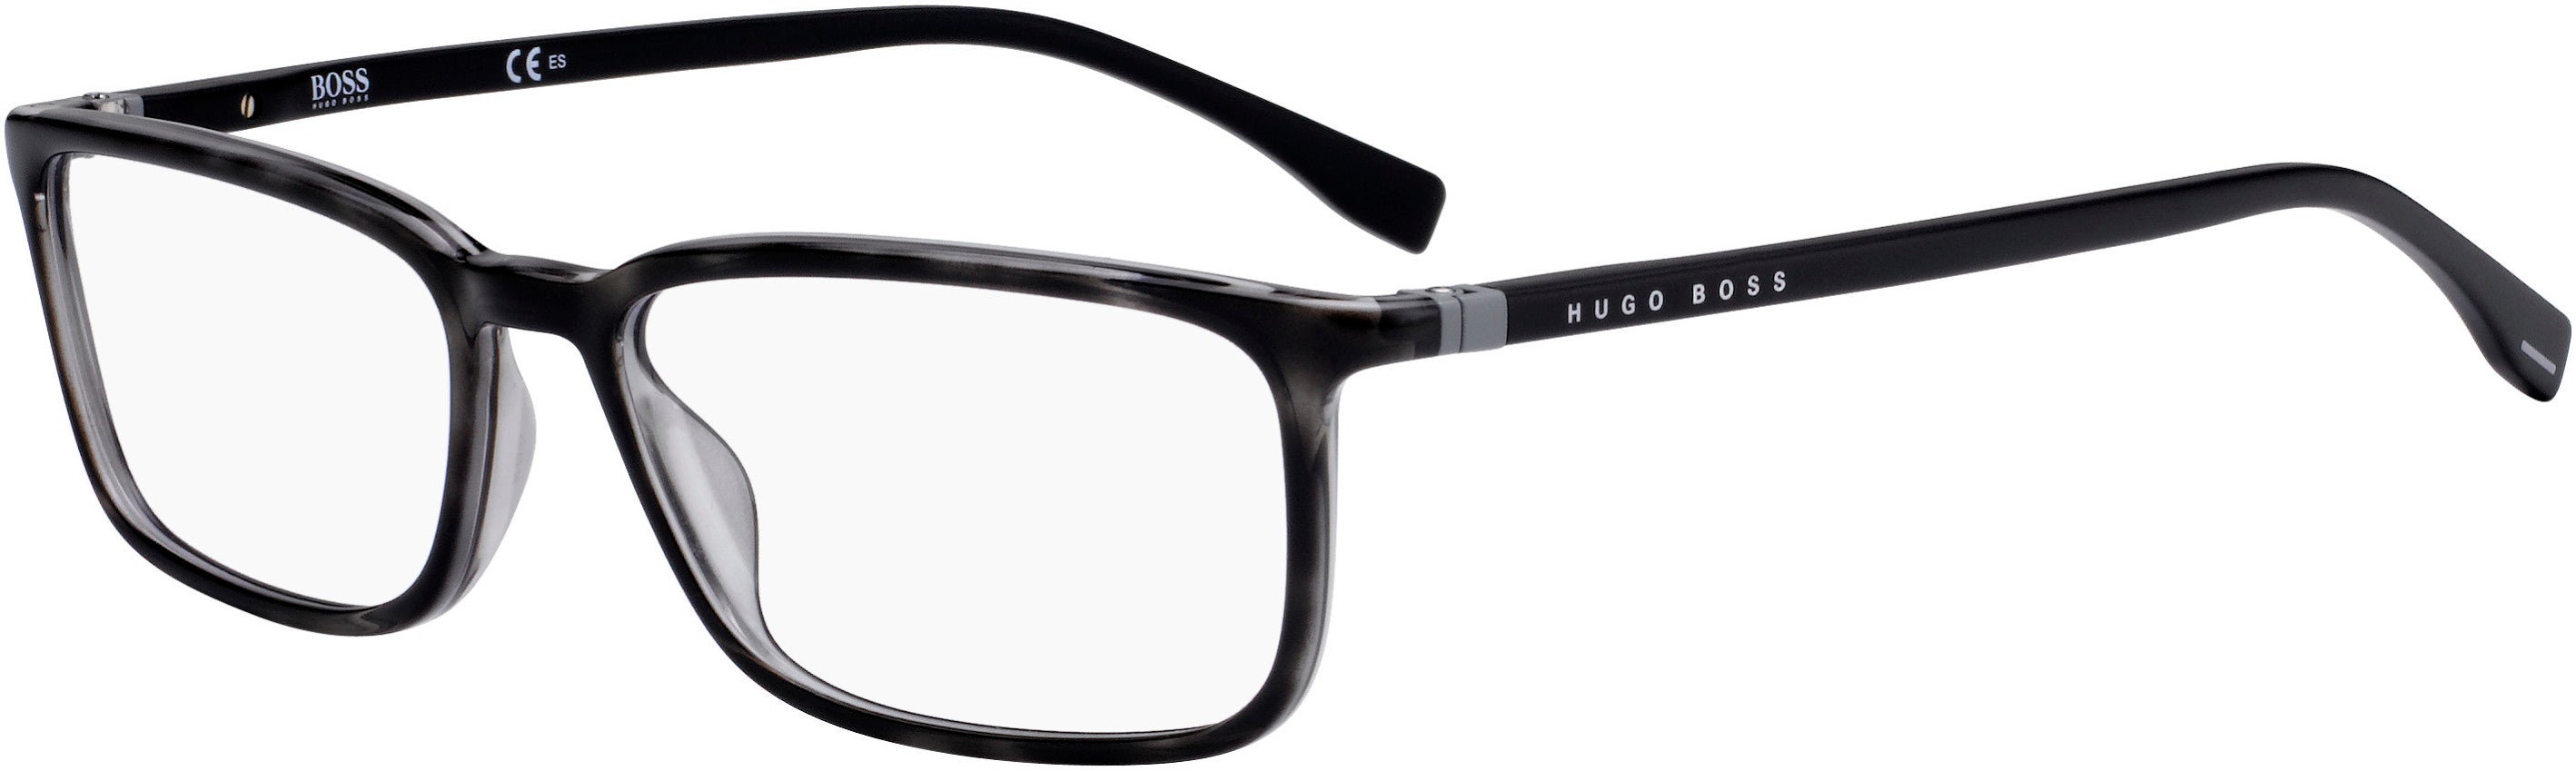 Boss (hub) Boss 0963 Rectangular Eyeglasses 0ACI-0ACI  Gray Bksptd (00 Demo Lens)